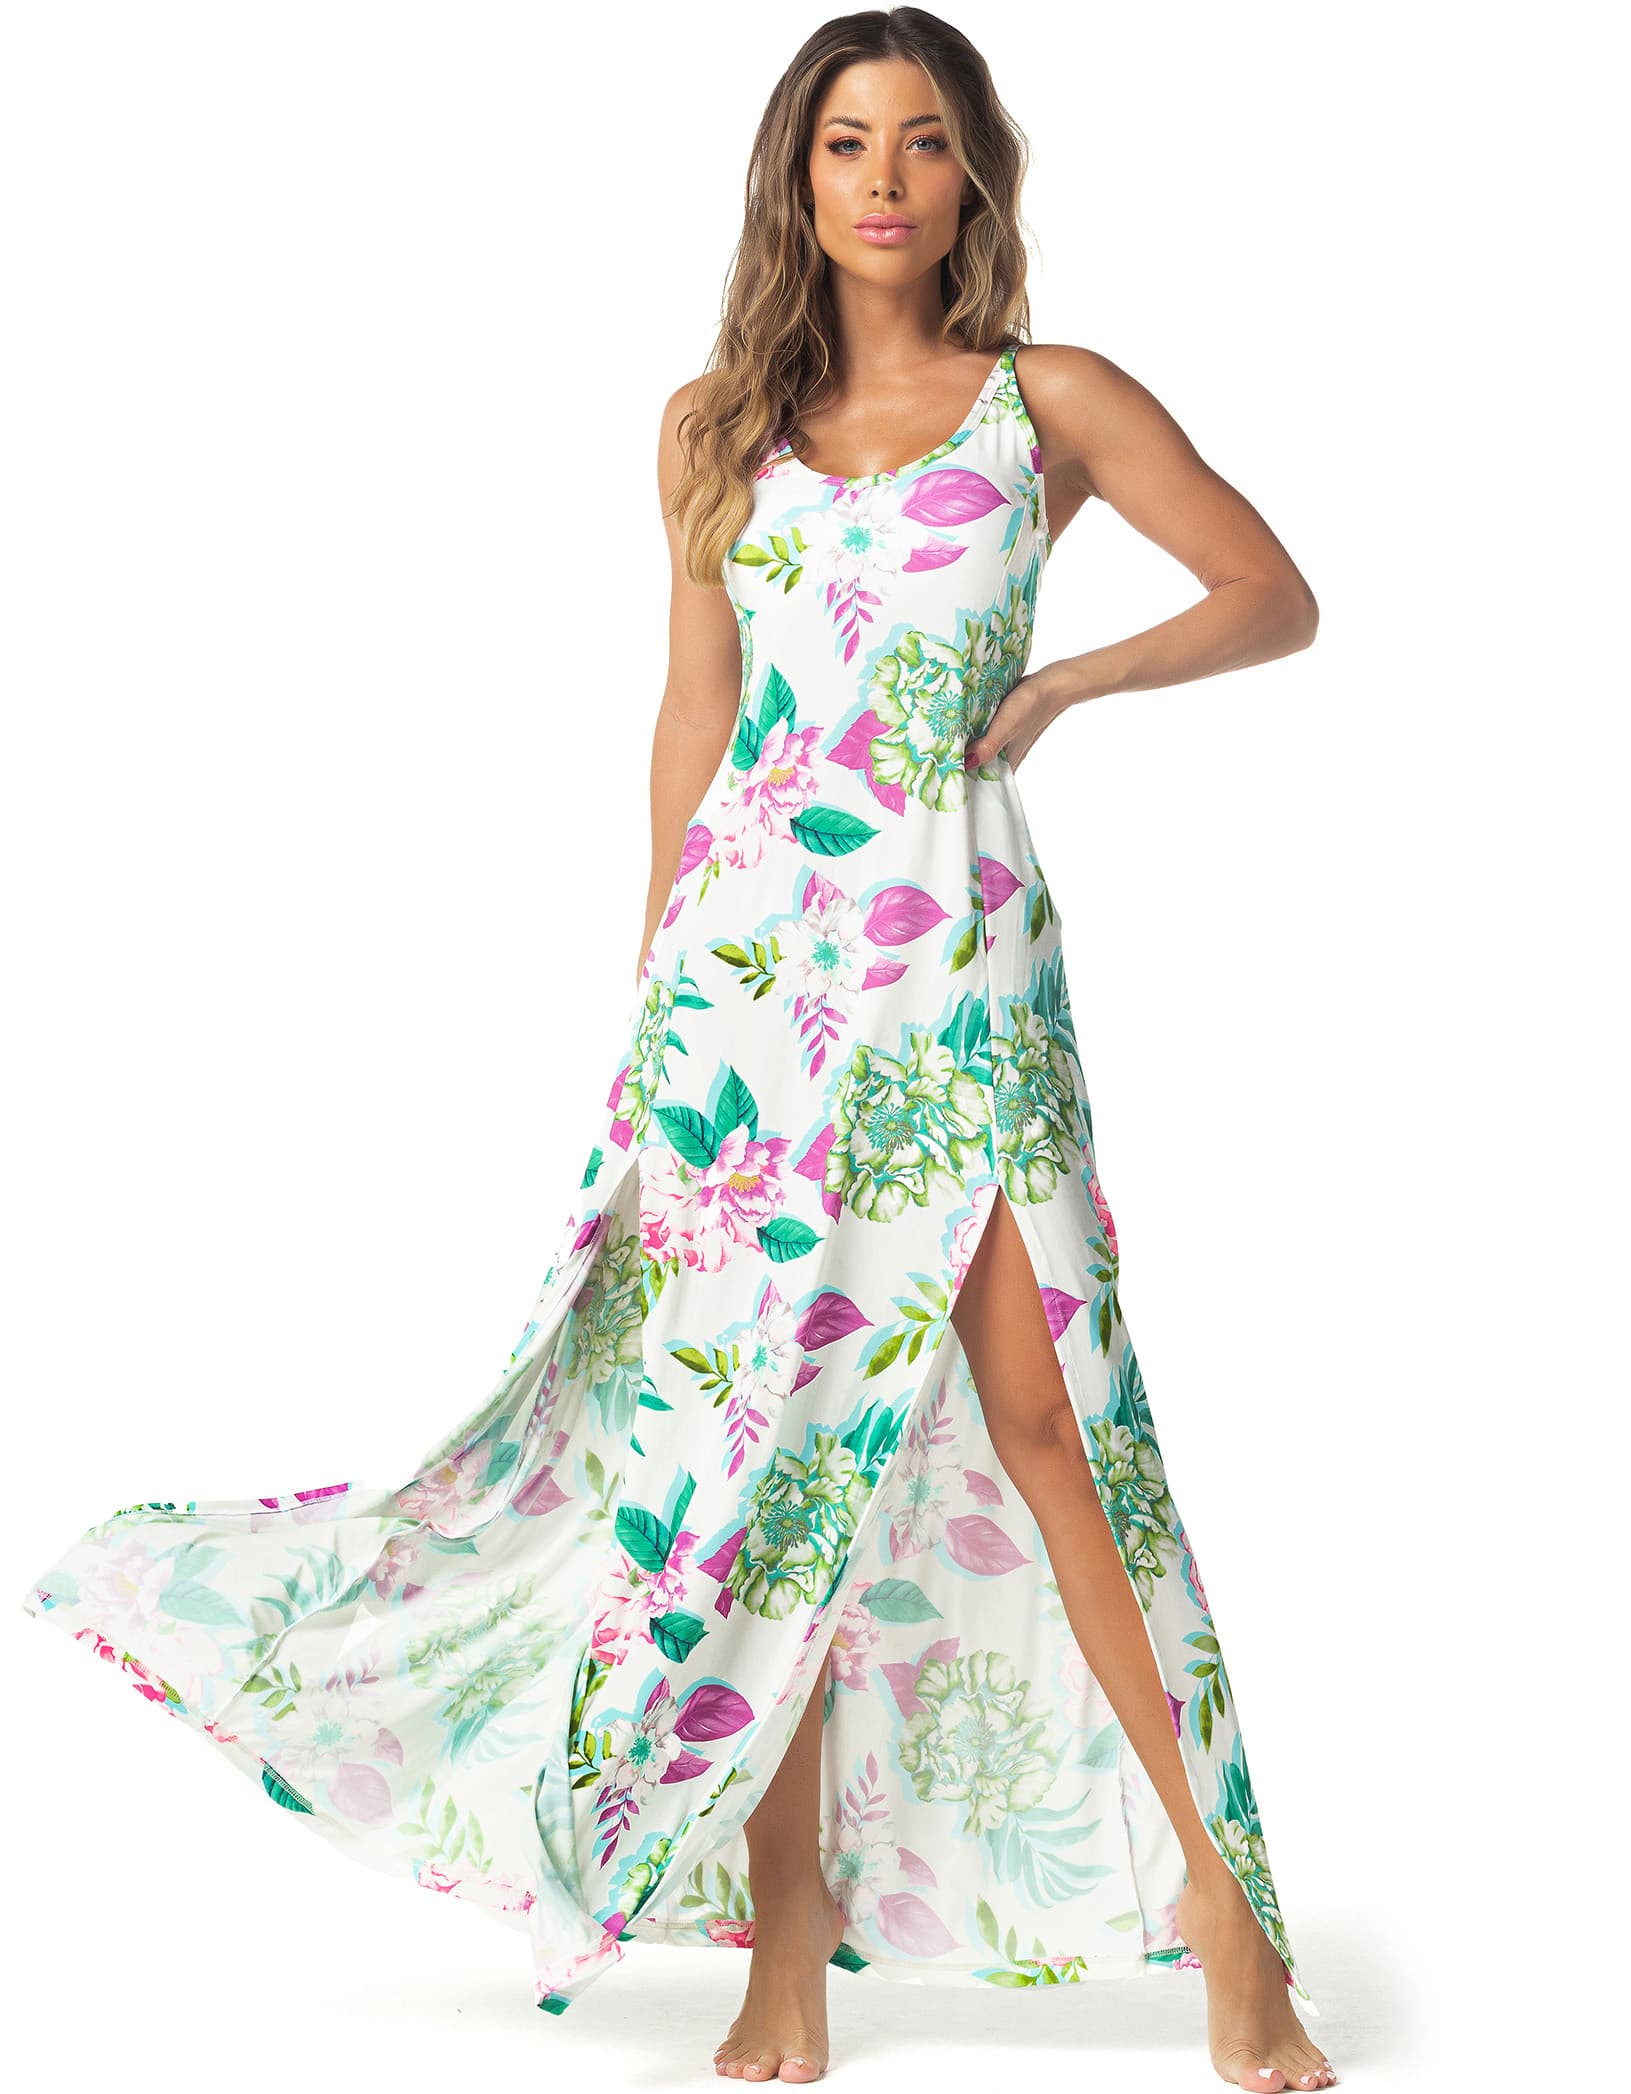 Vestem - Beach Outing Dress Blues White Floral - SP275.E1088